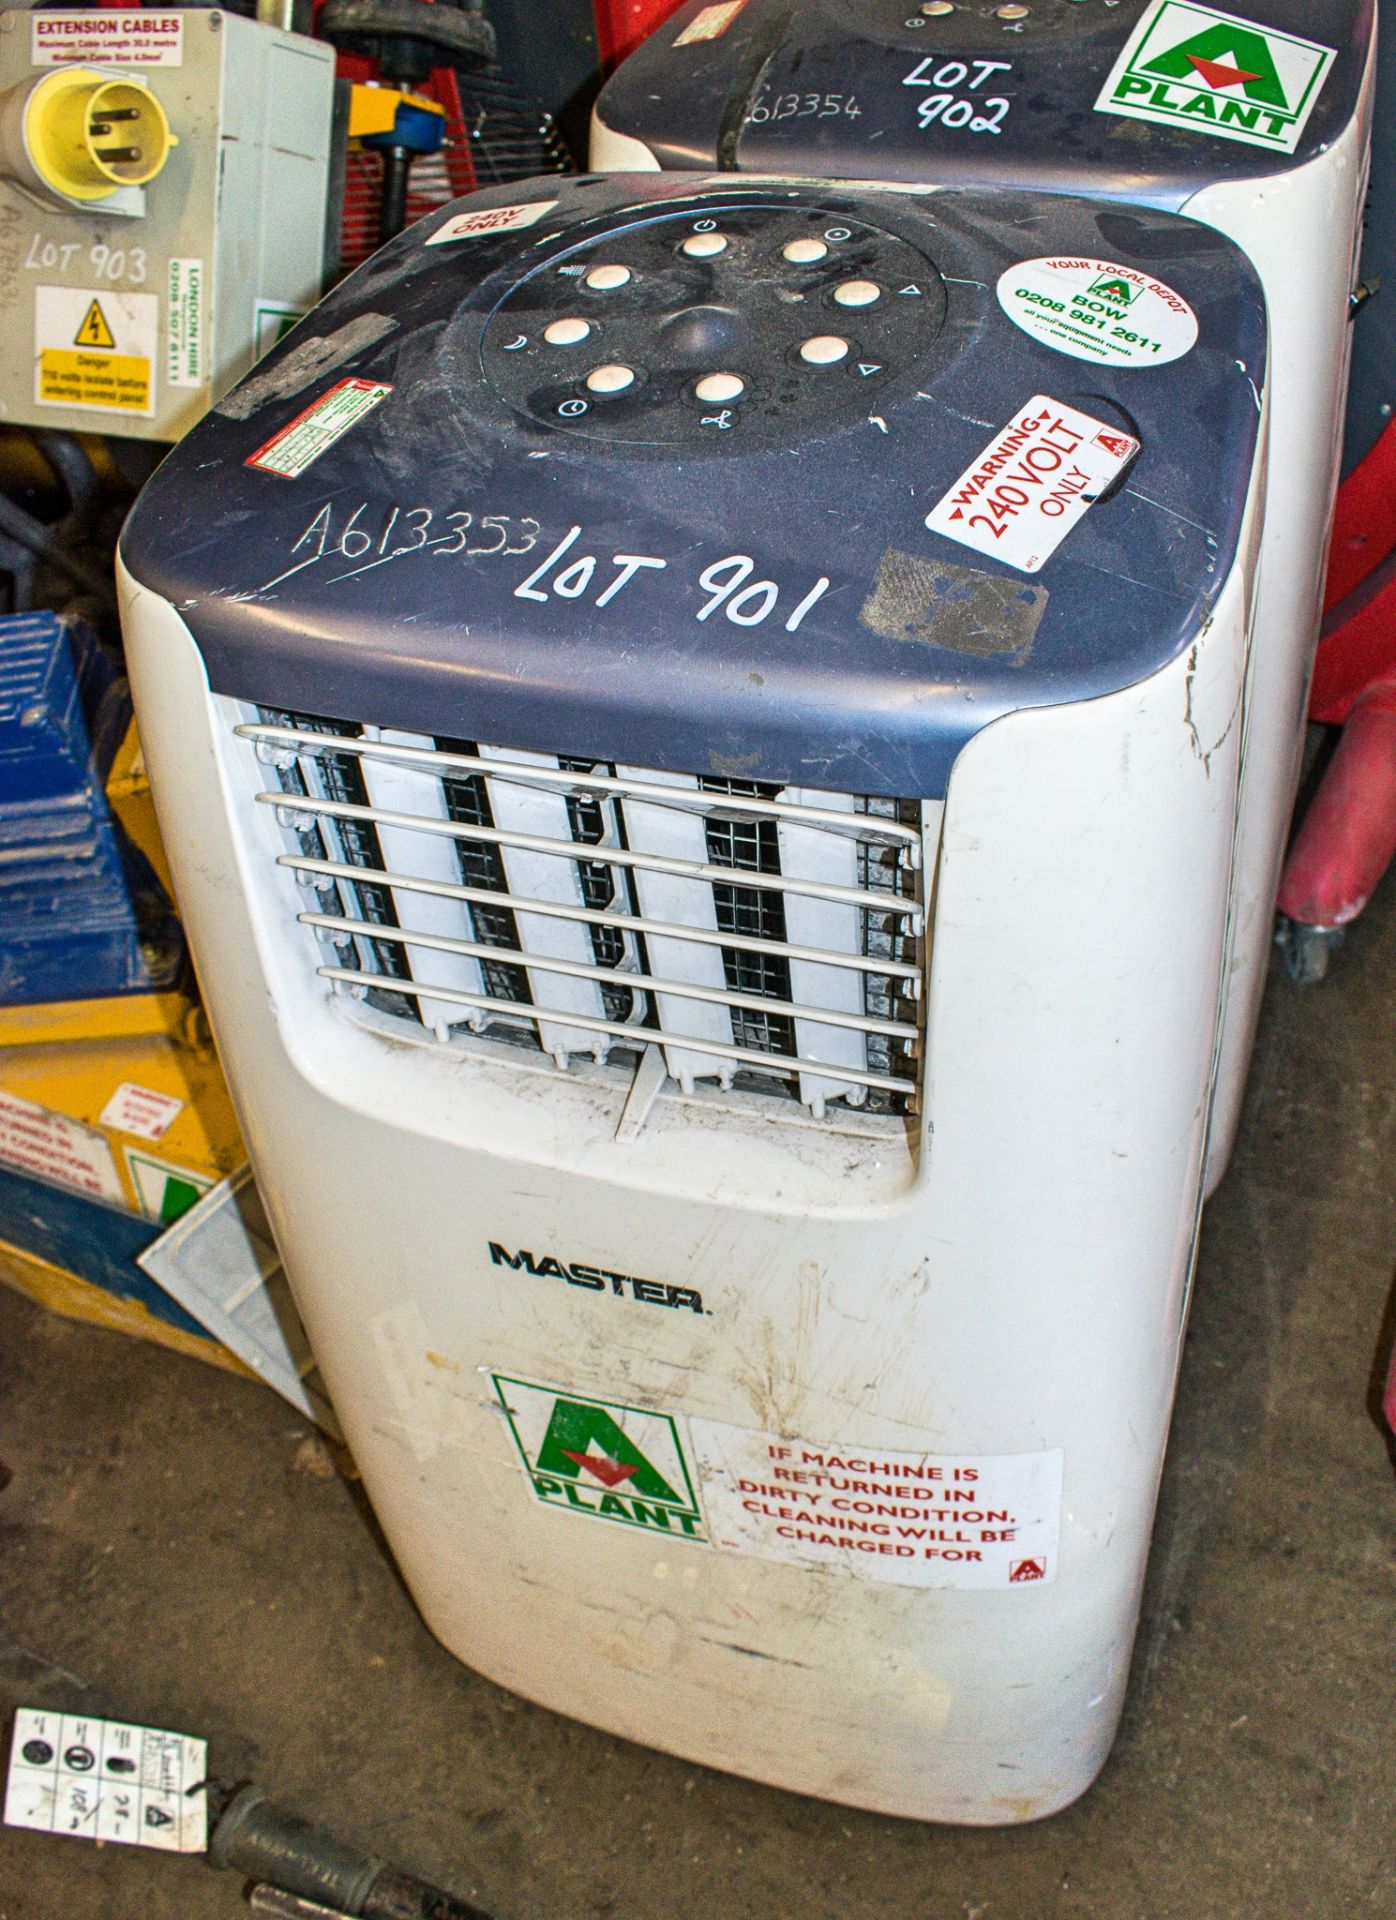 Master 240v air conditioning unit A613353